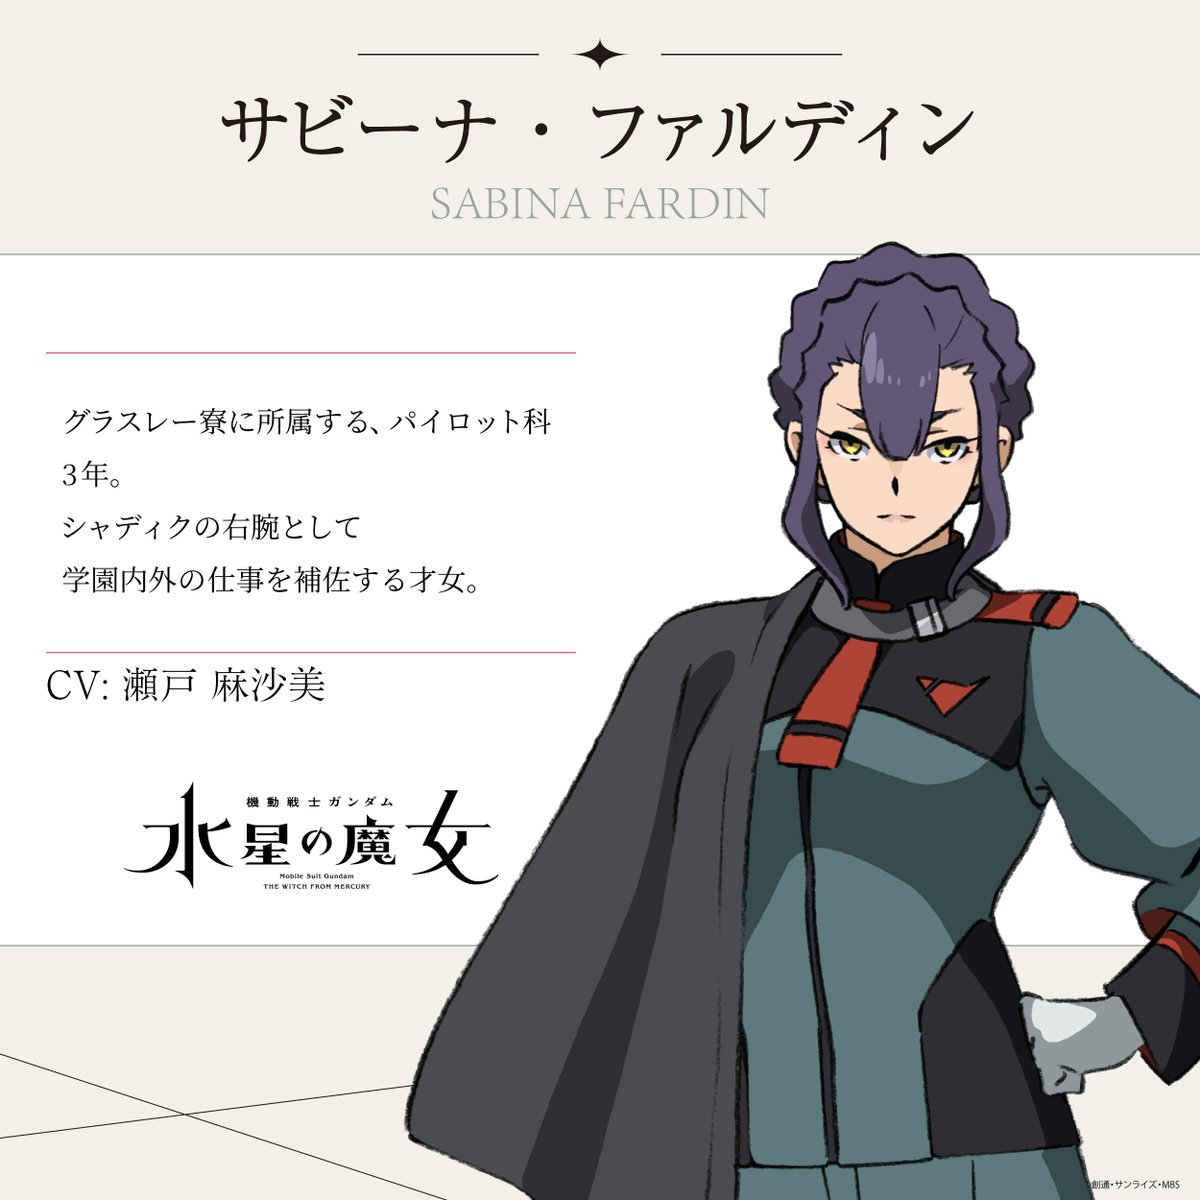 Mobile Suit Gundam: The Witch from Mercury Asami Seto trong vai Sabina Fardin